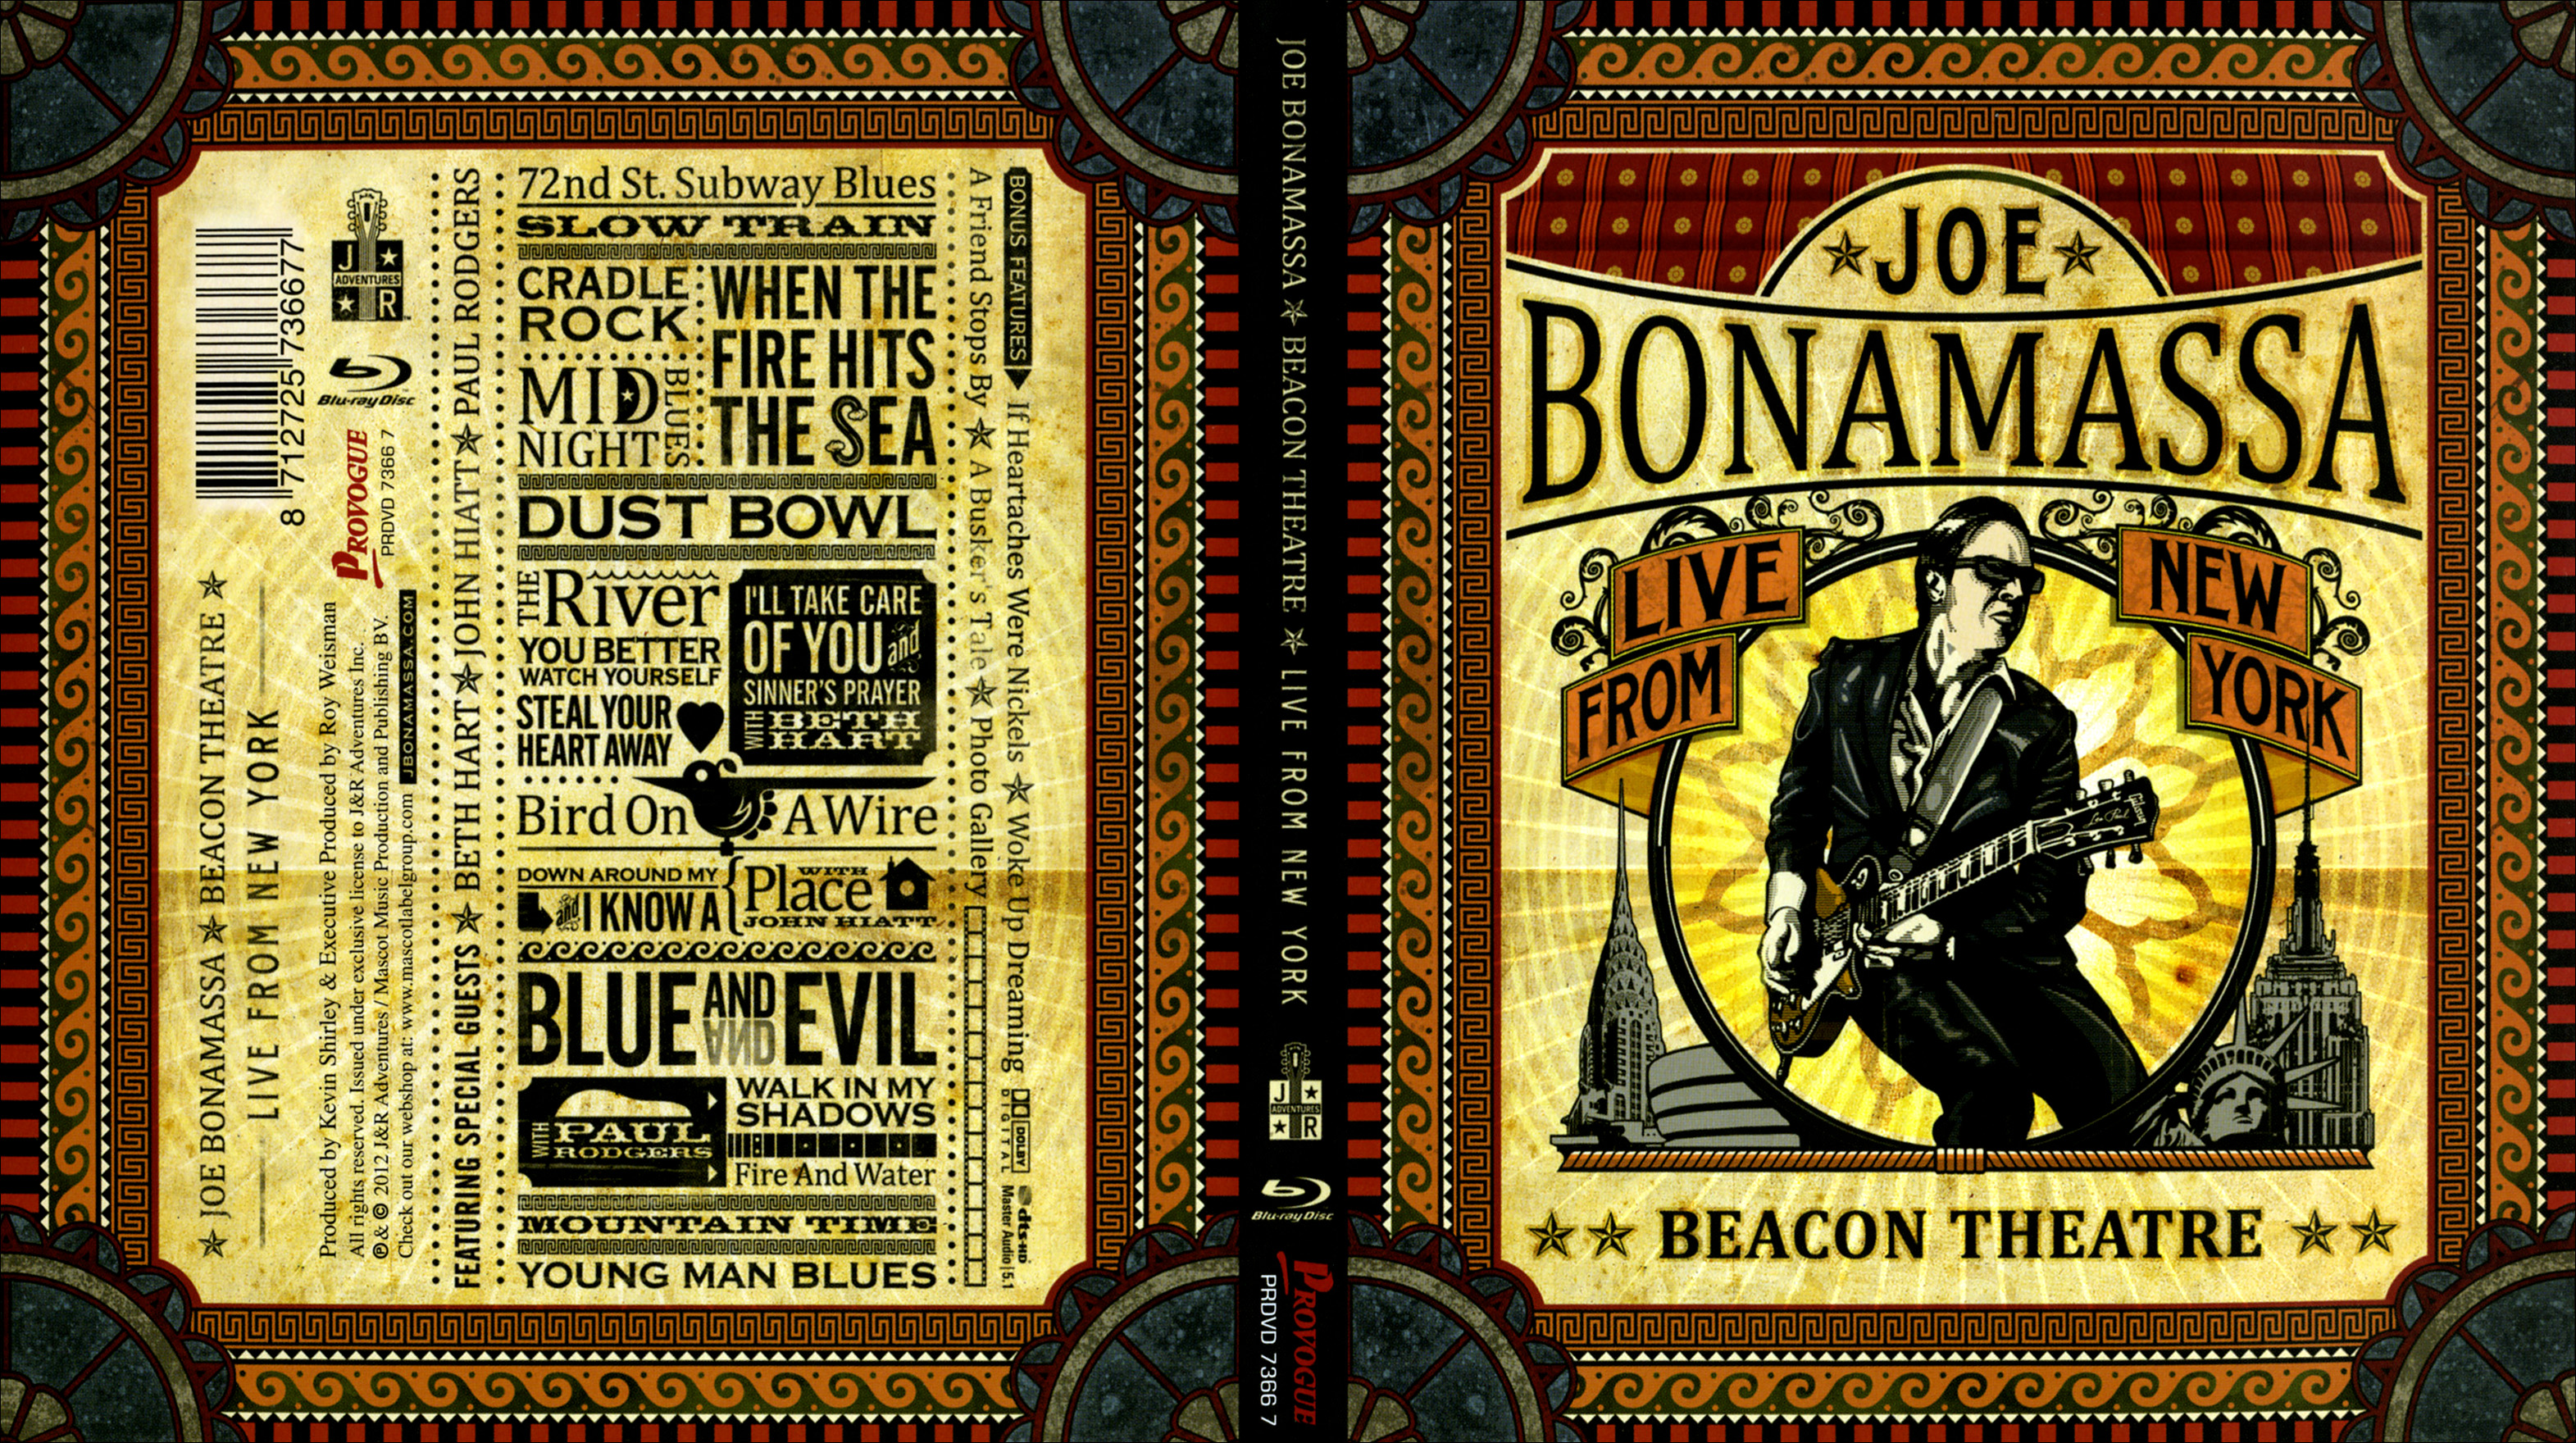 Jaquette DVD Joe Bonamassa Live from New York (BLU-RAY)